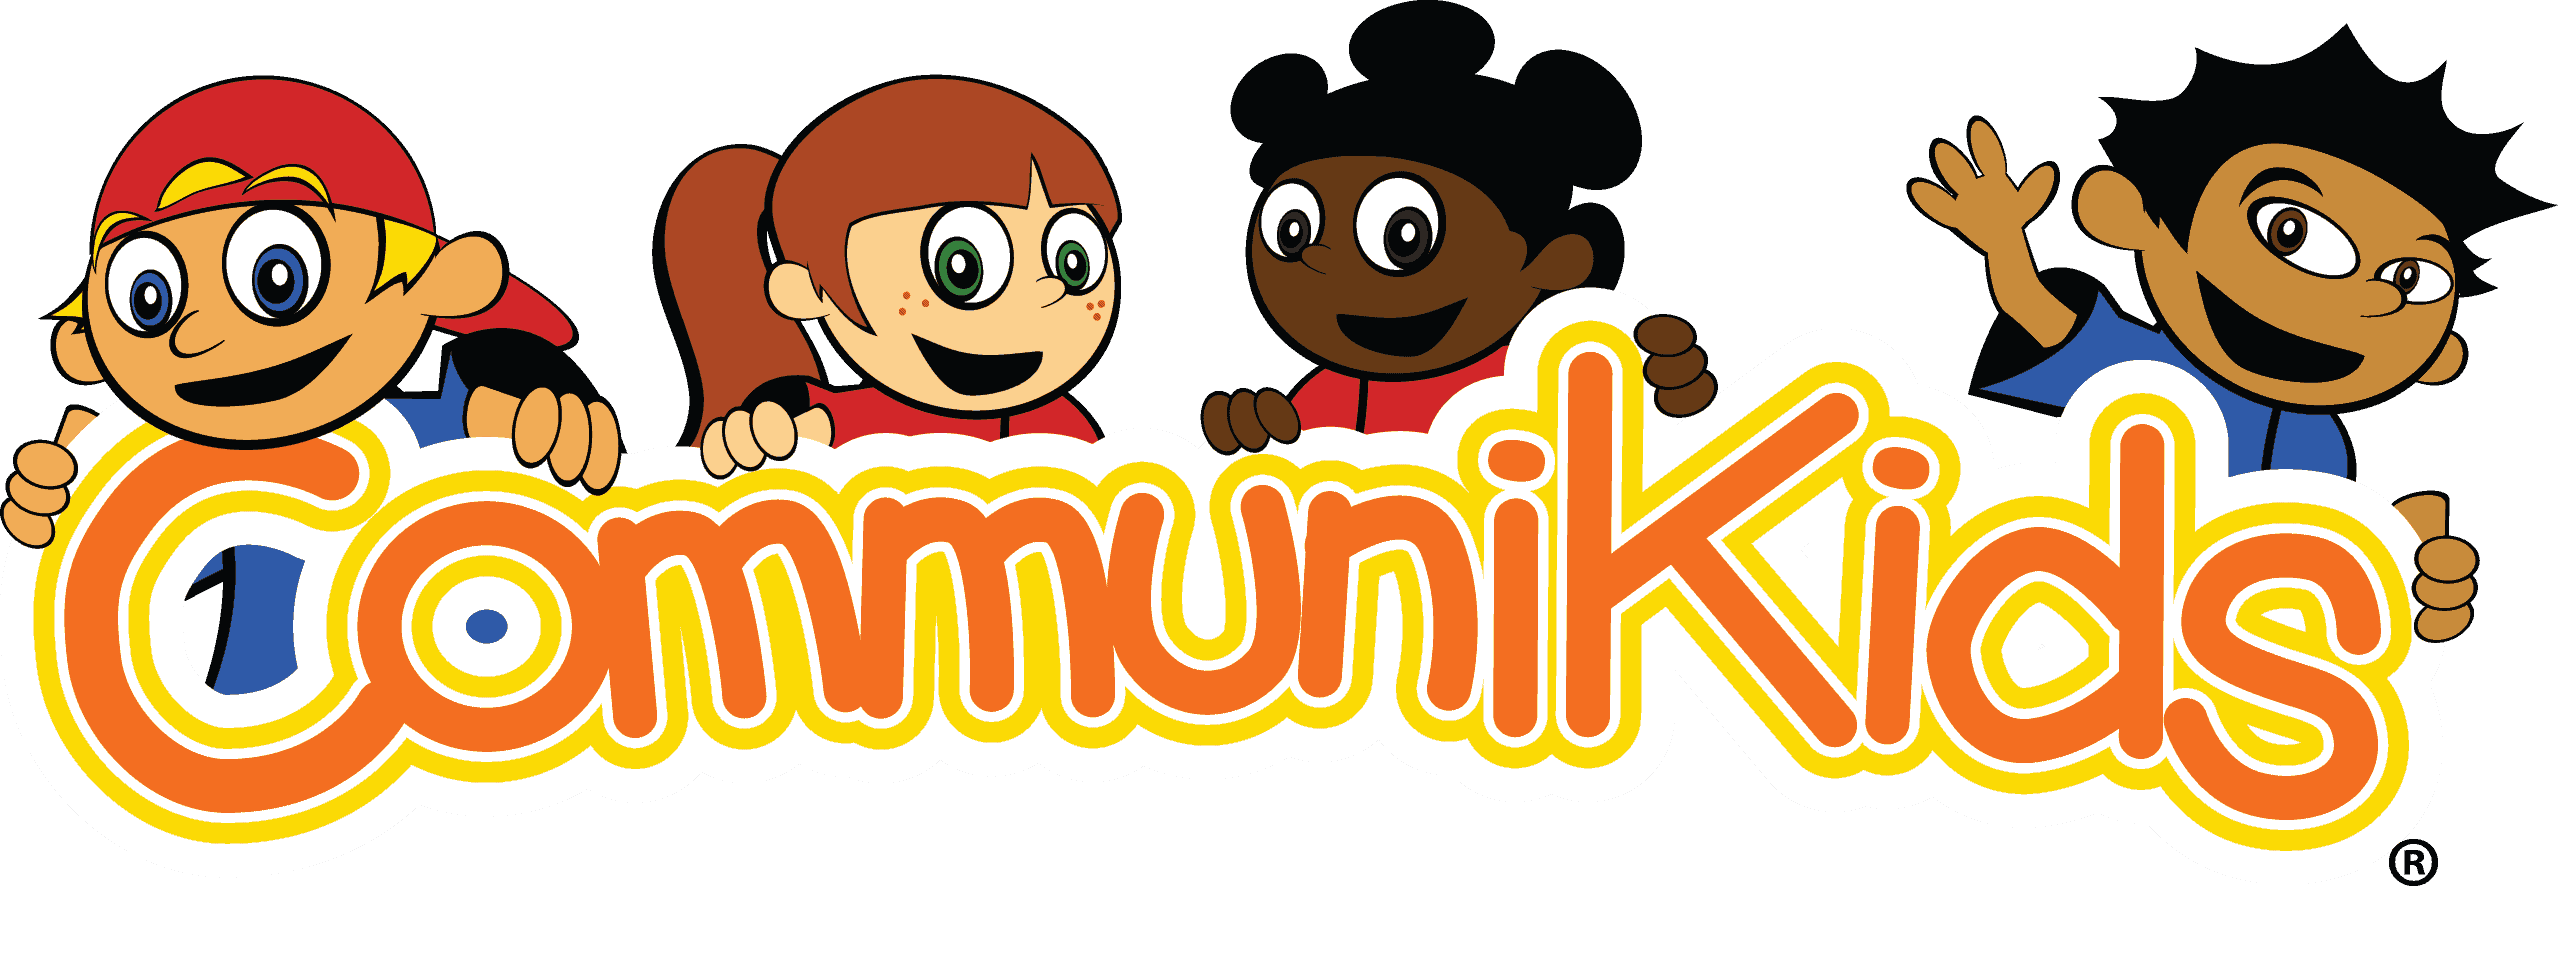 CommuniKids Bilingual Language Immersion Preschool Logo